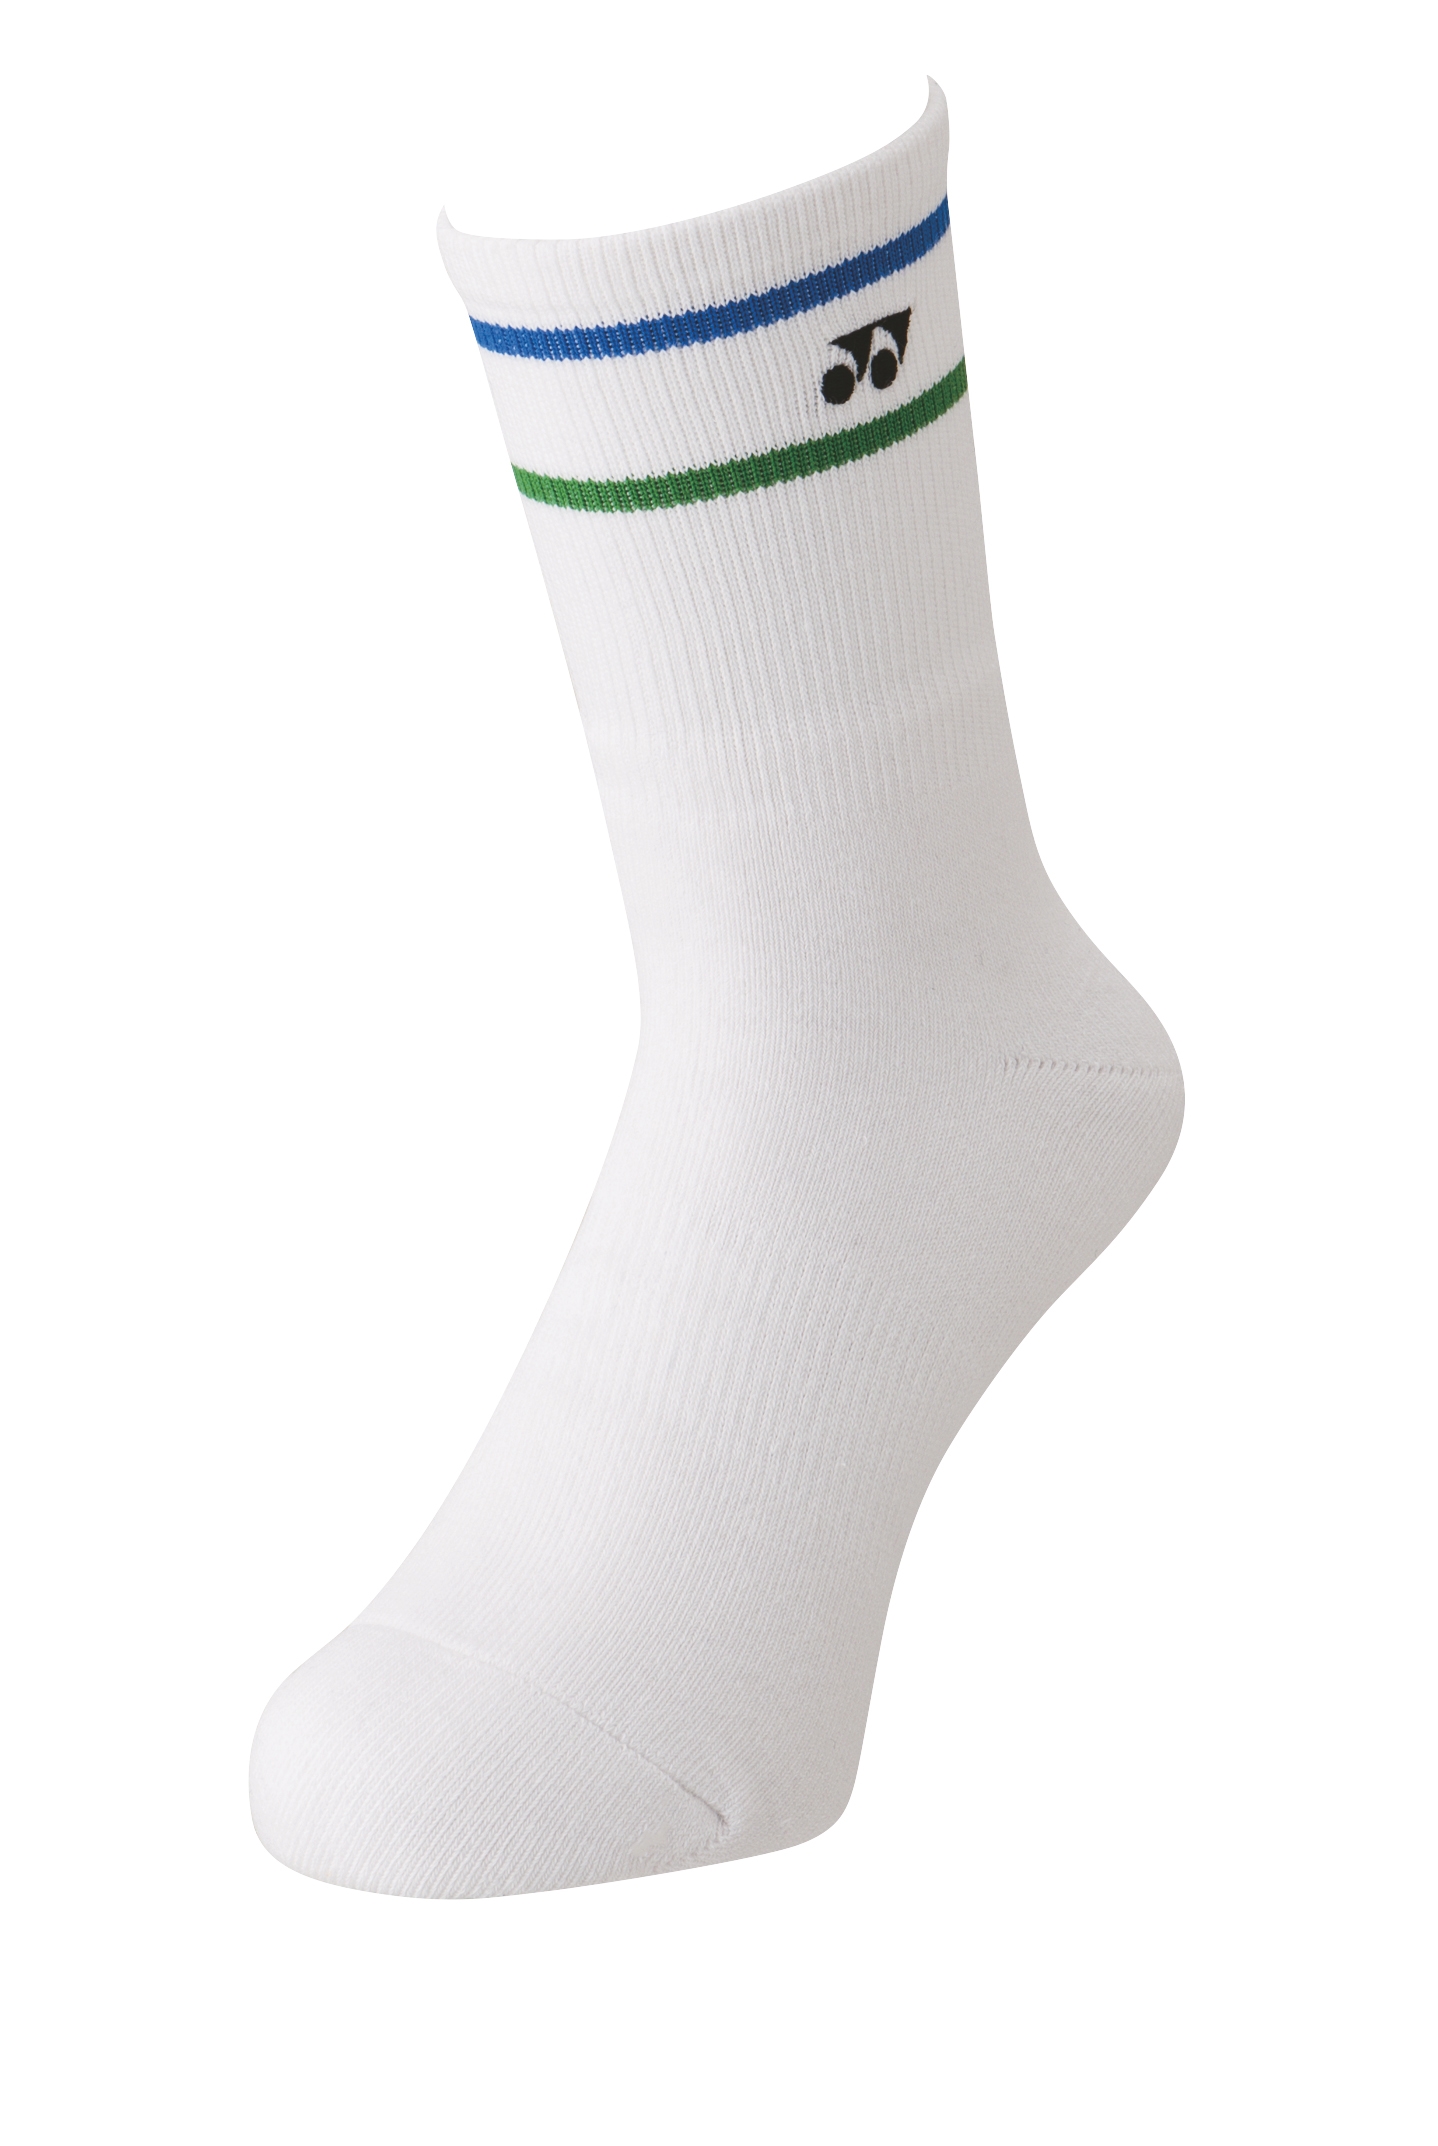 Yonex Badminton Socks 1855YX emerald green, 25-28 